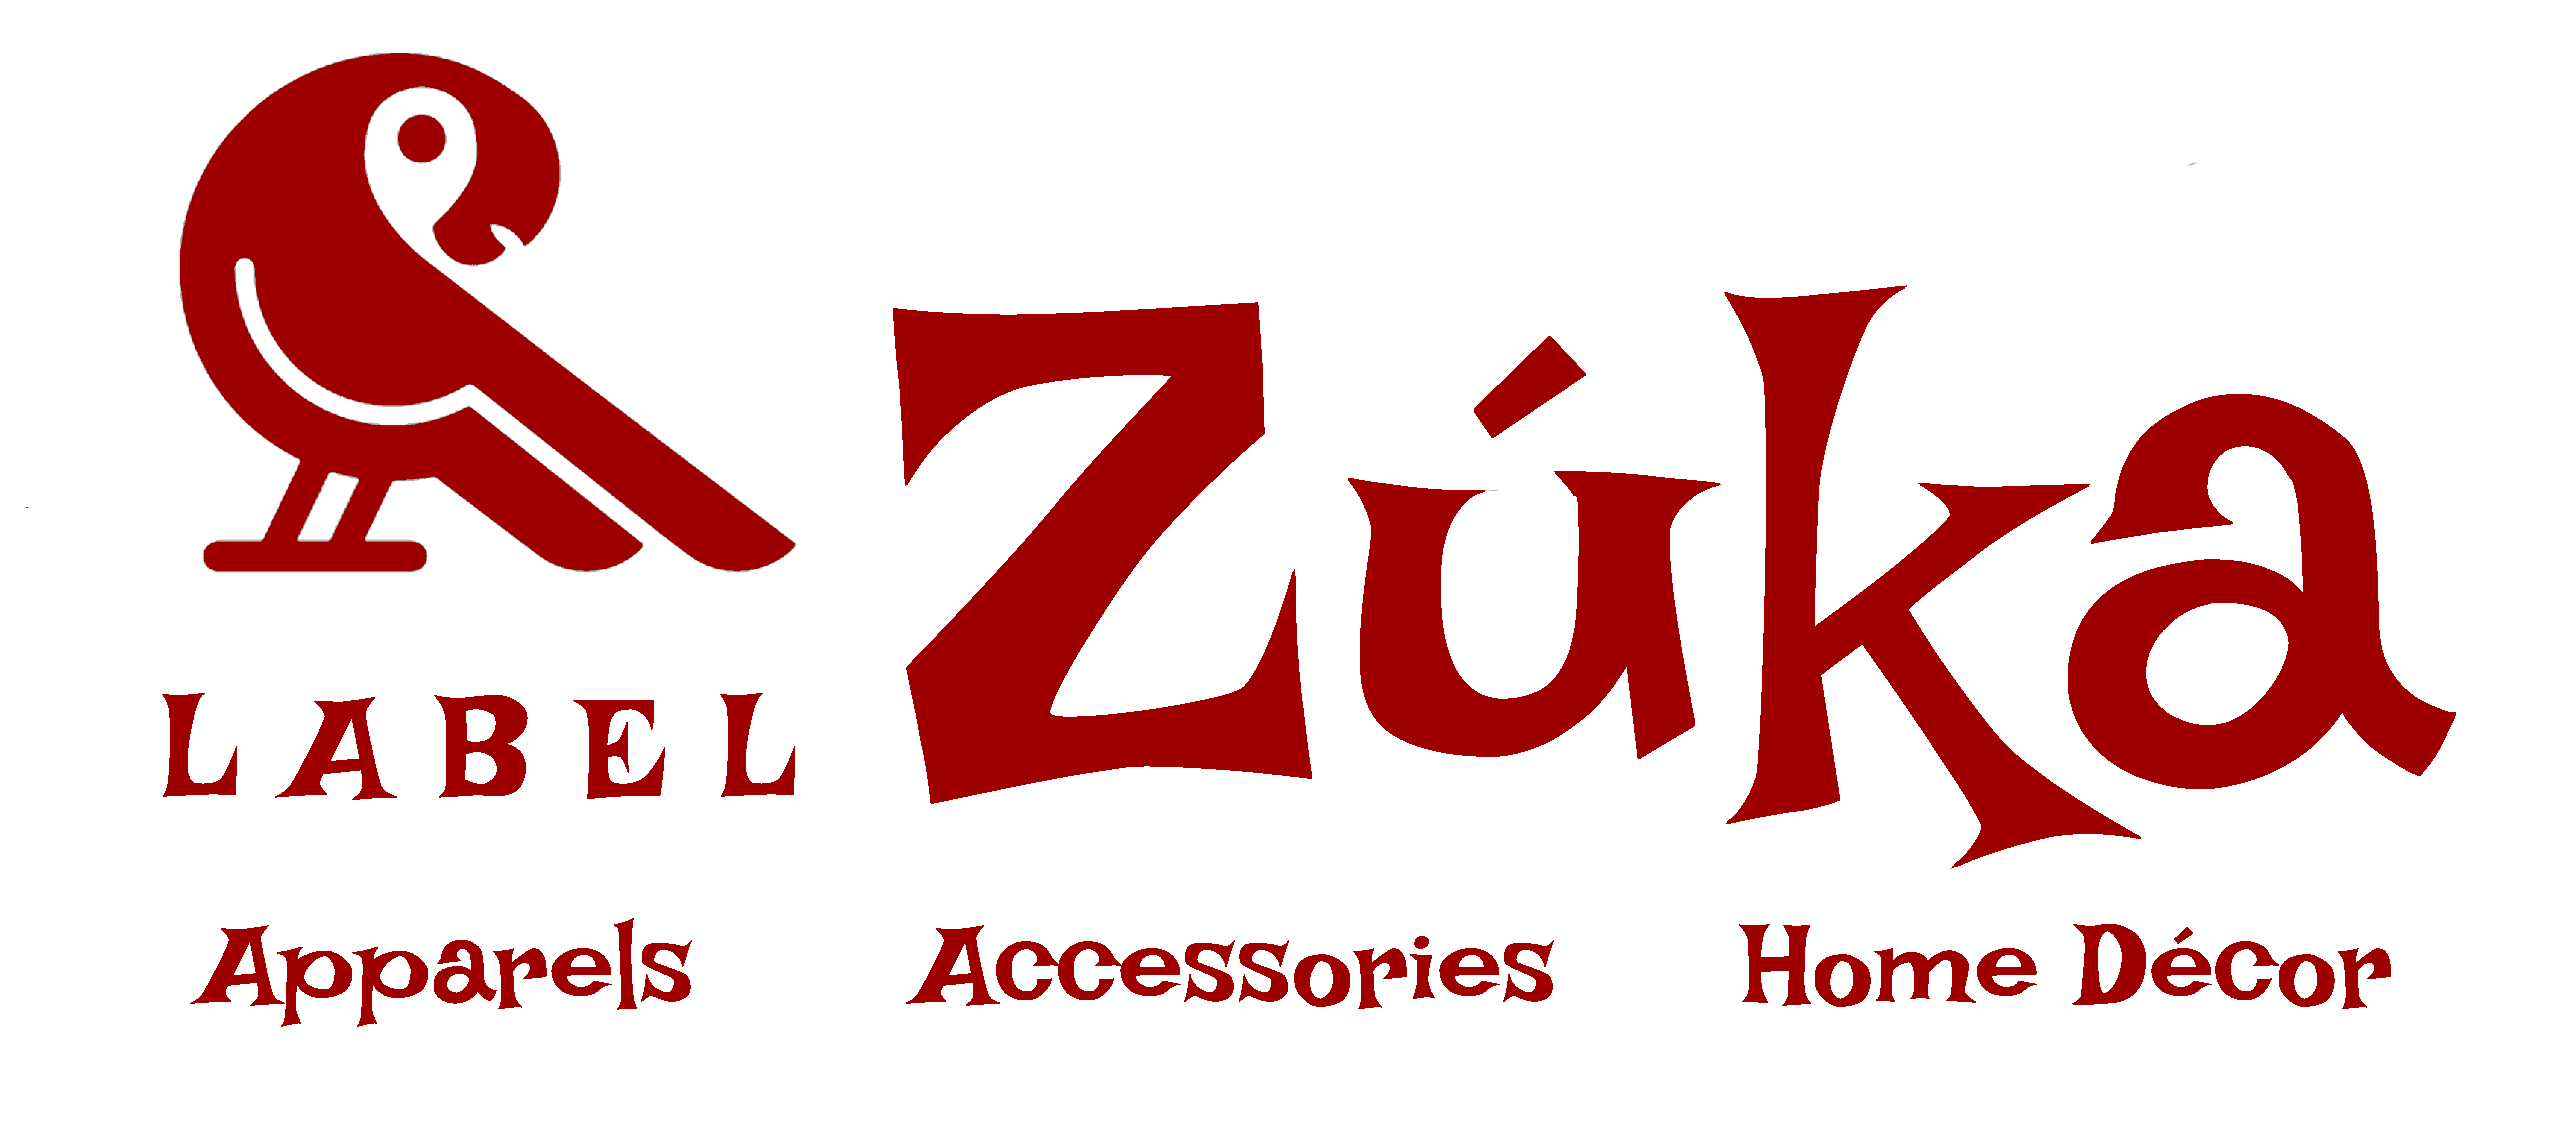 Label Zuka - Apparels | Accessories | Home Décor